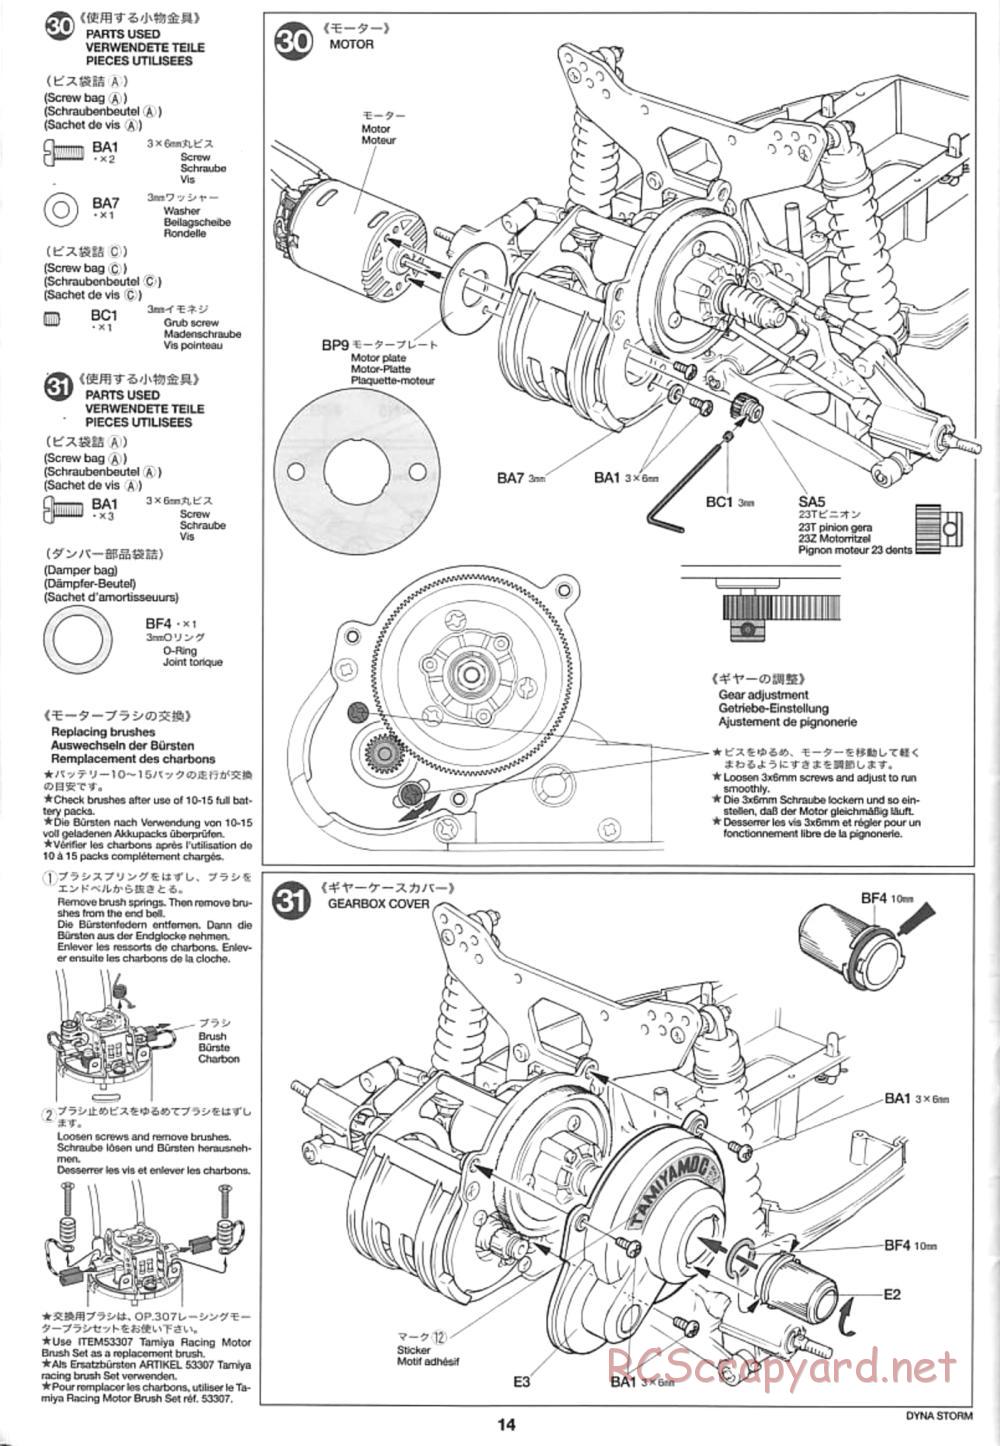 Tamiya - Dyna Storm Chassis - Manual - Page 14